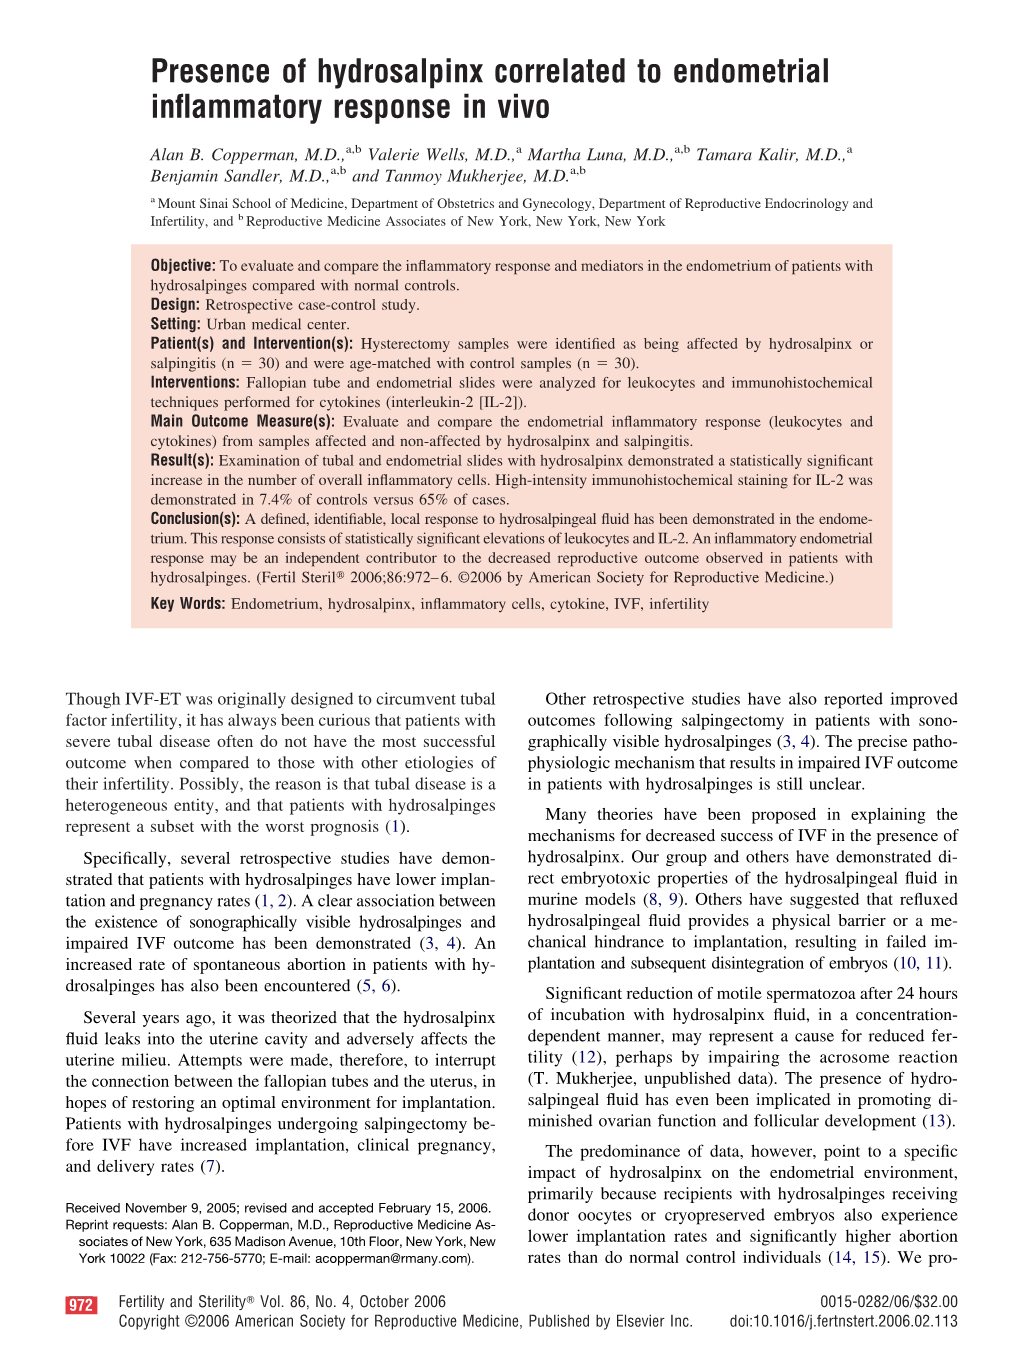 Presence of Hydrosalpinx Correlated to Endometrial Inflammatory